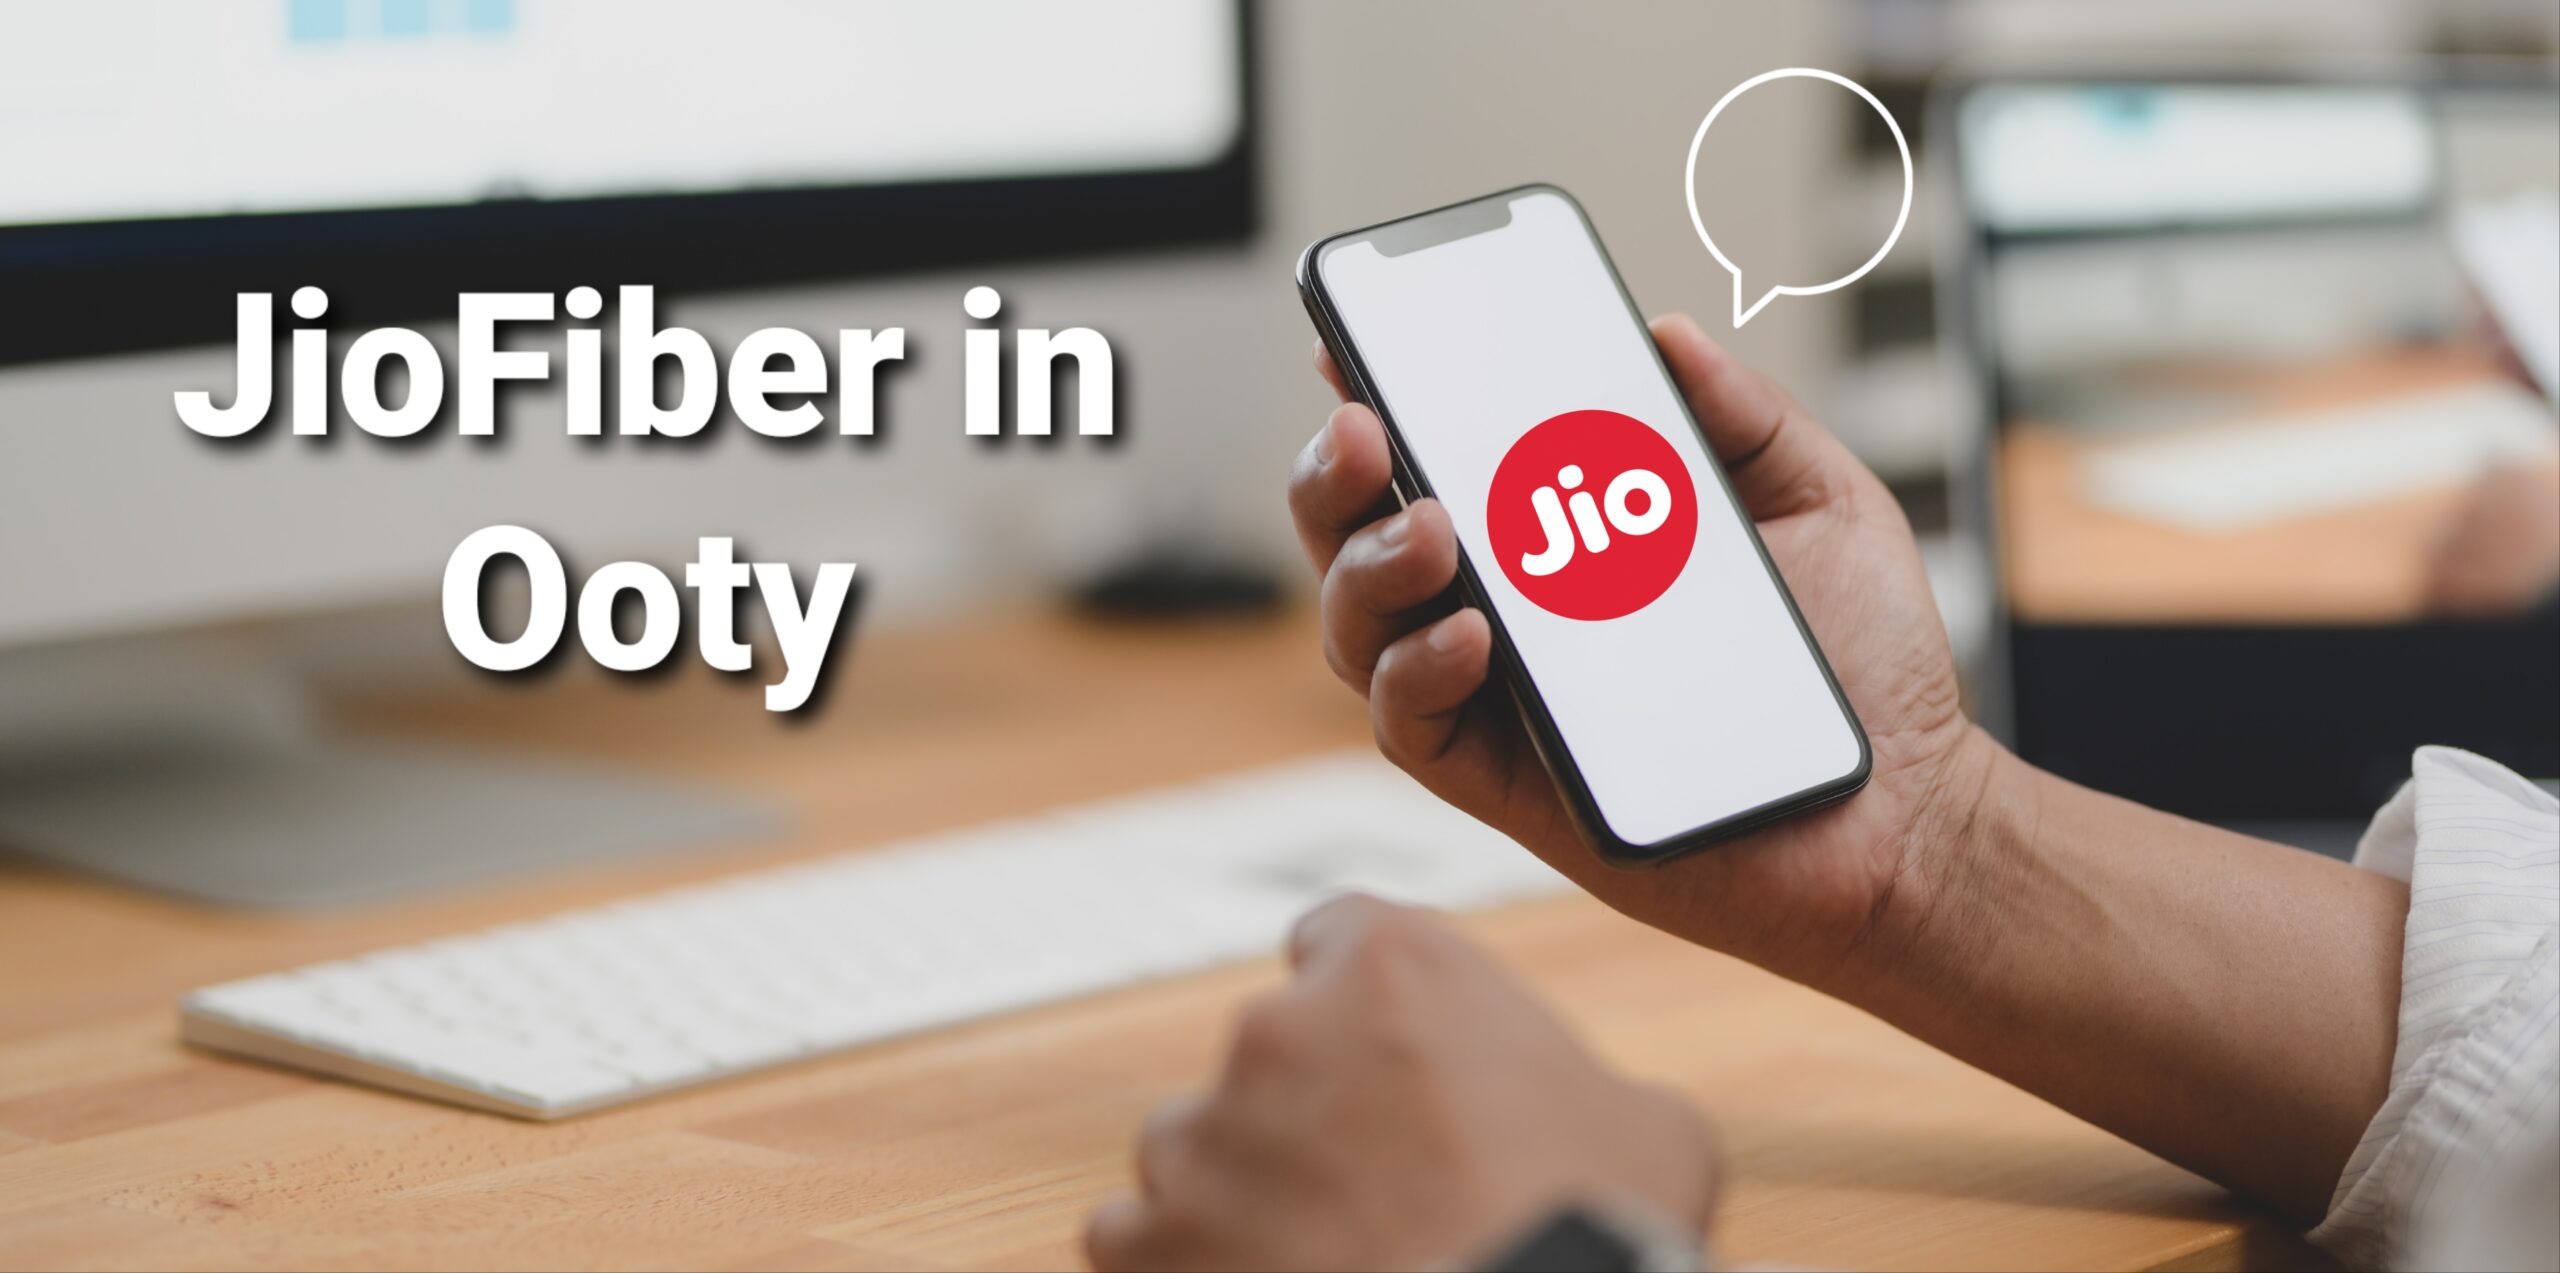 Jio Fiber Ooty Registration, Plans, Offers, Customer Care